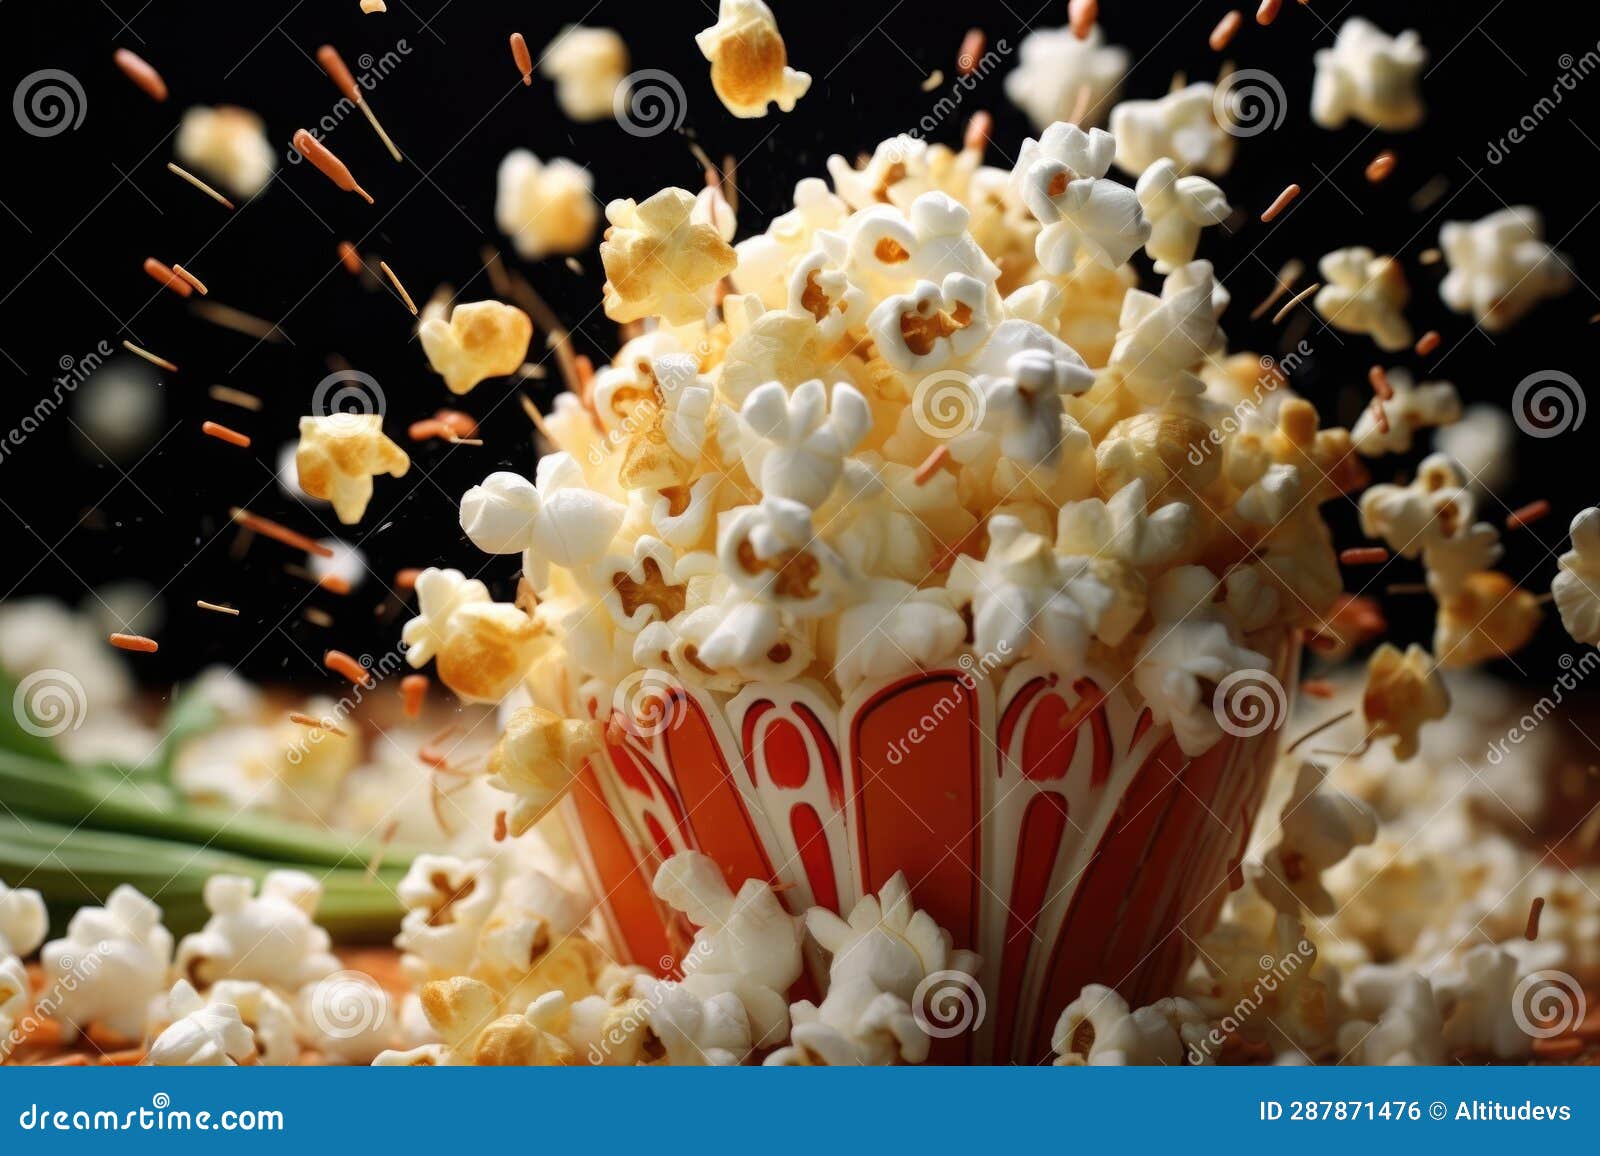 popcorn kernels bursting in slow motion